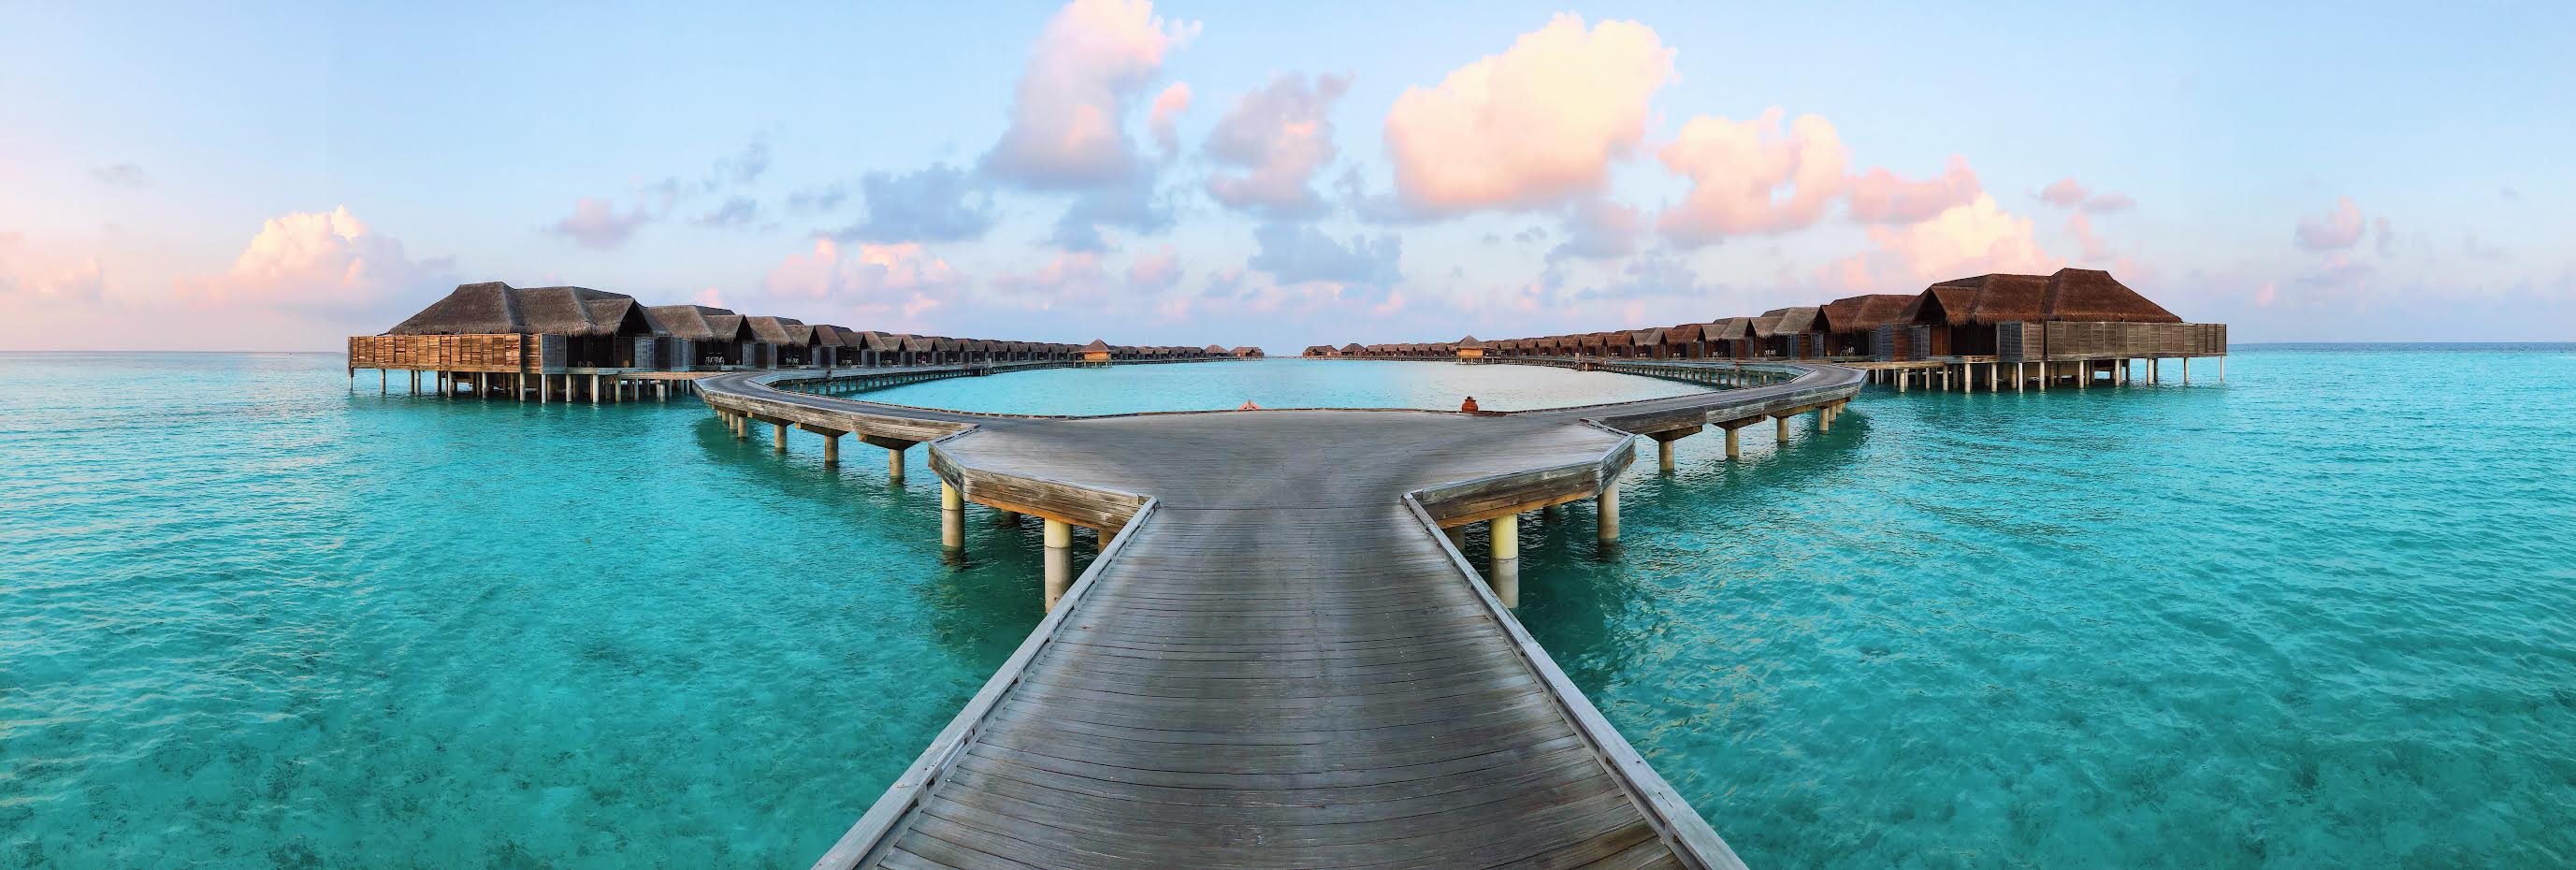 Muslim-travel-blog-complete-travel-guide-Maldives-overwater-villas